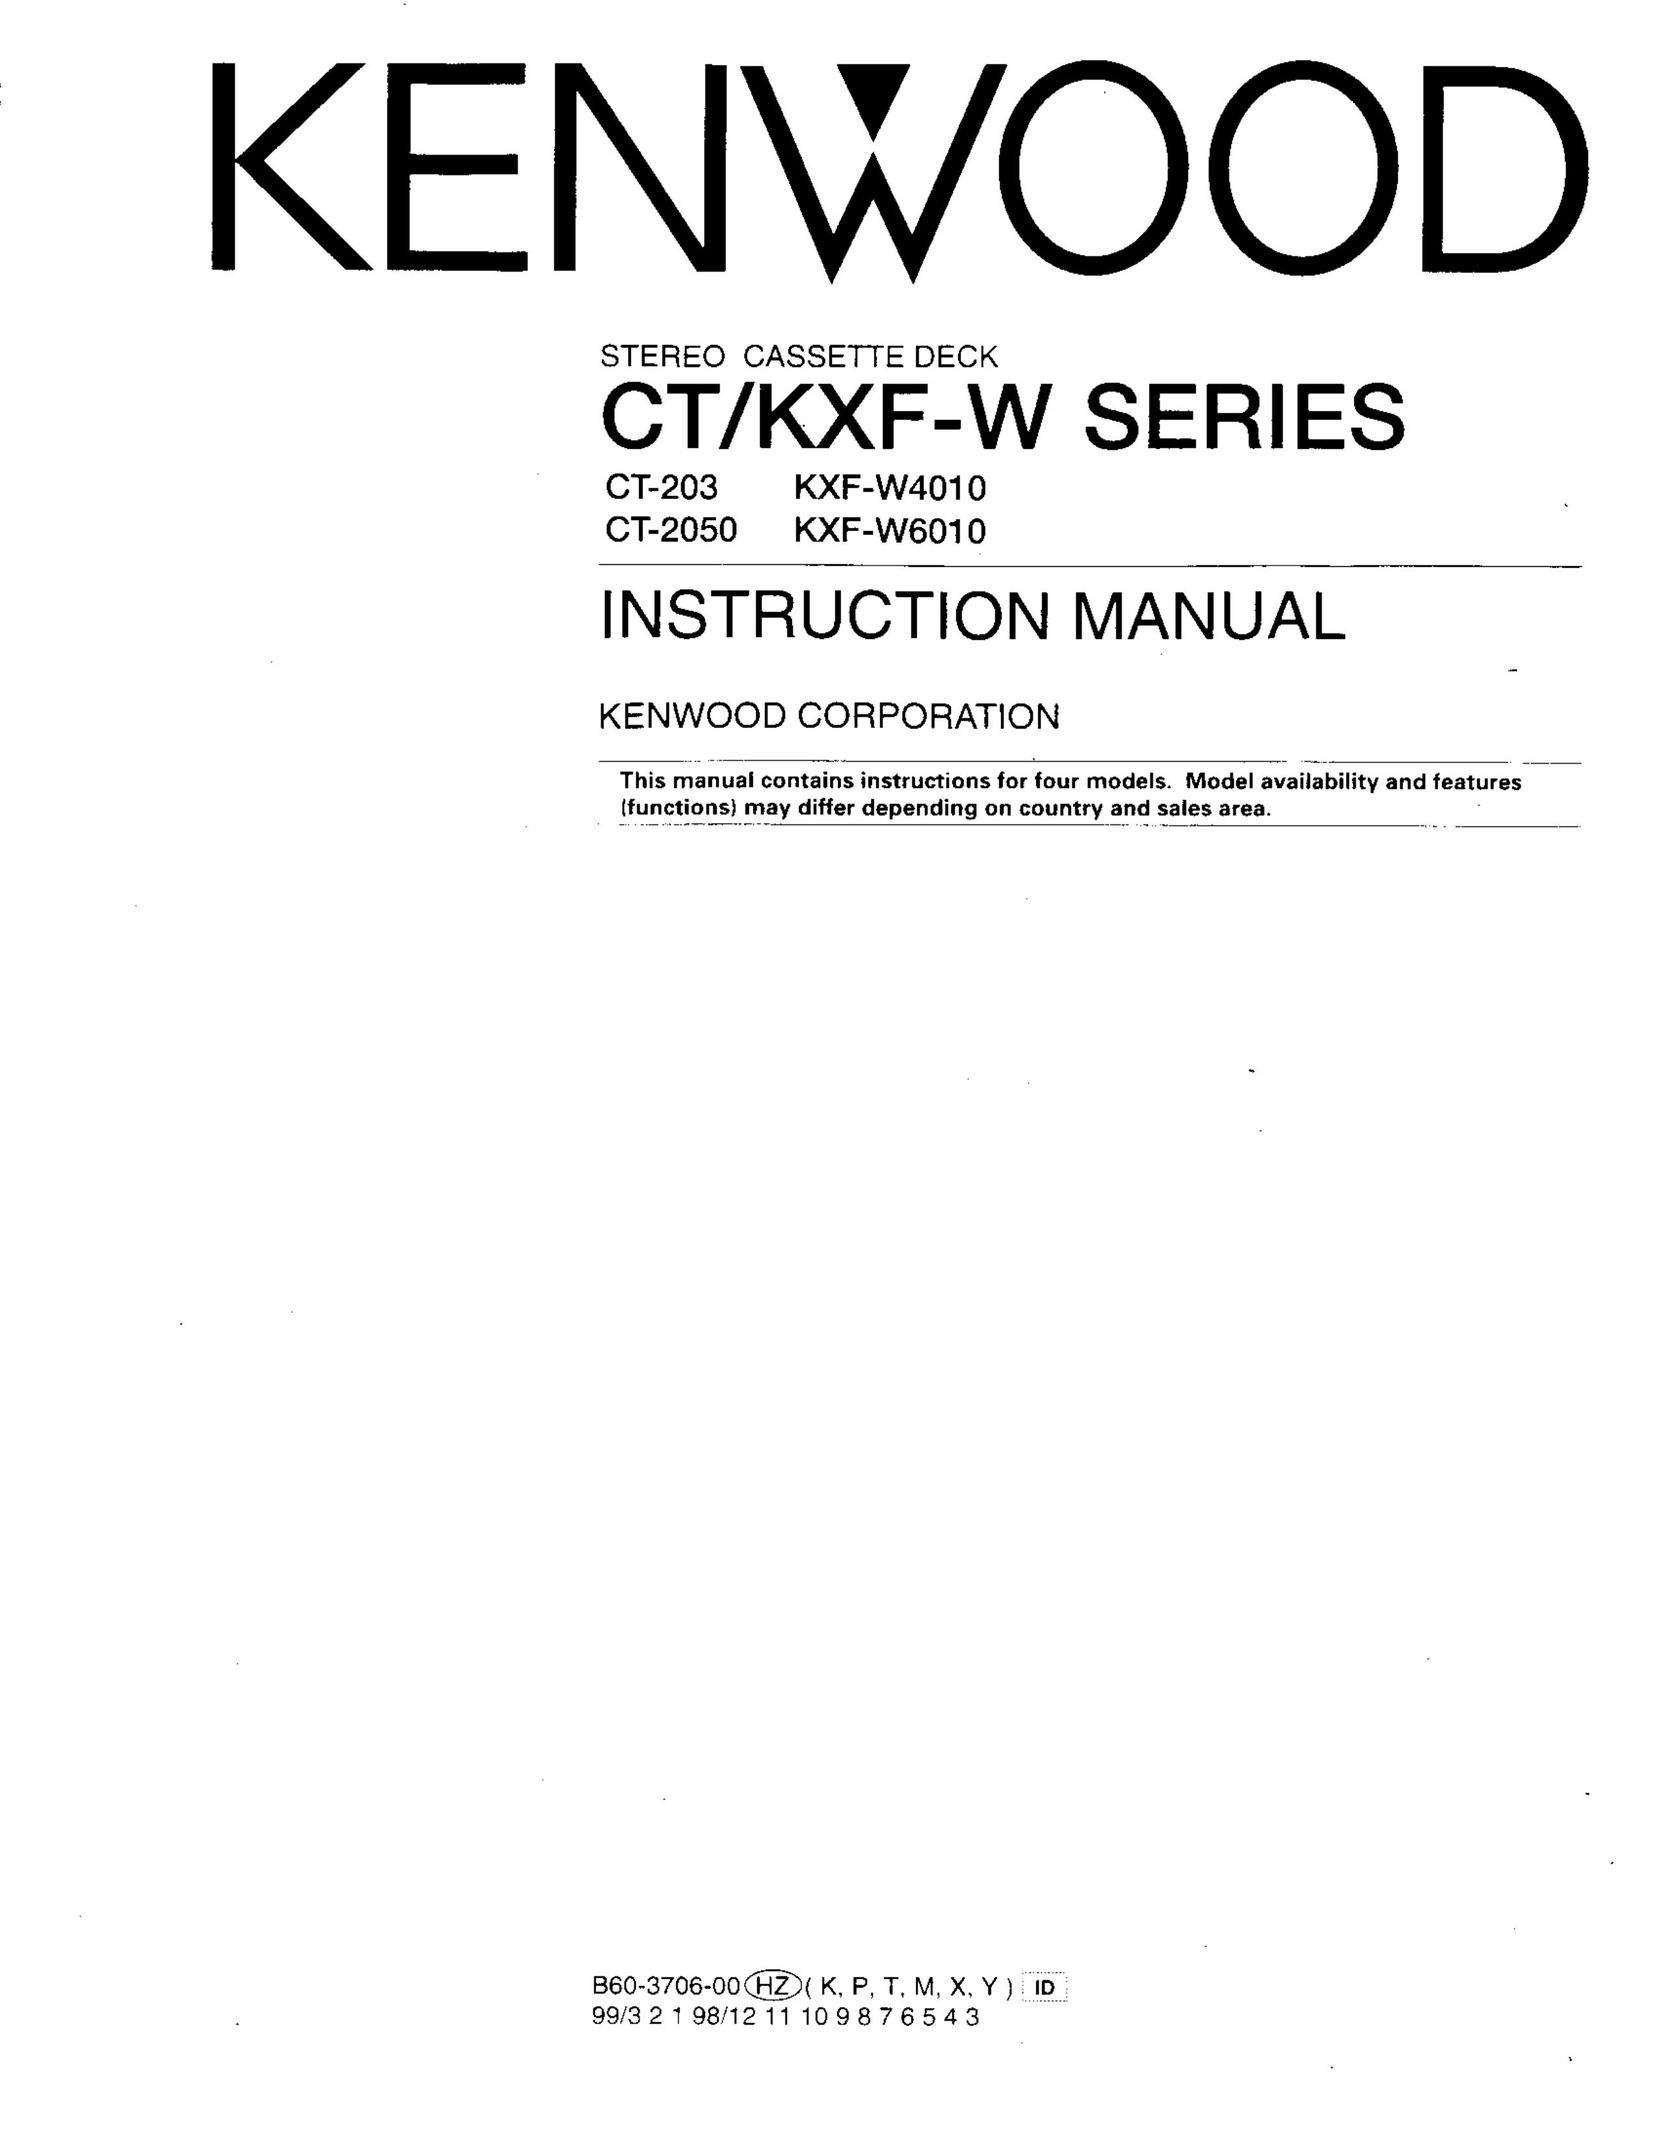 Kenwood 68 Car Stereo System User Manual